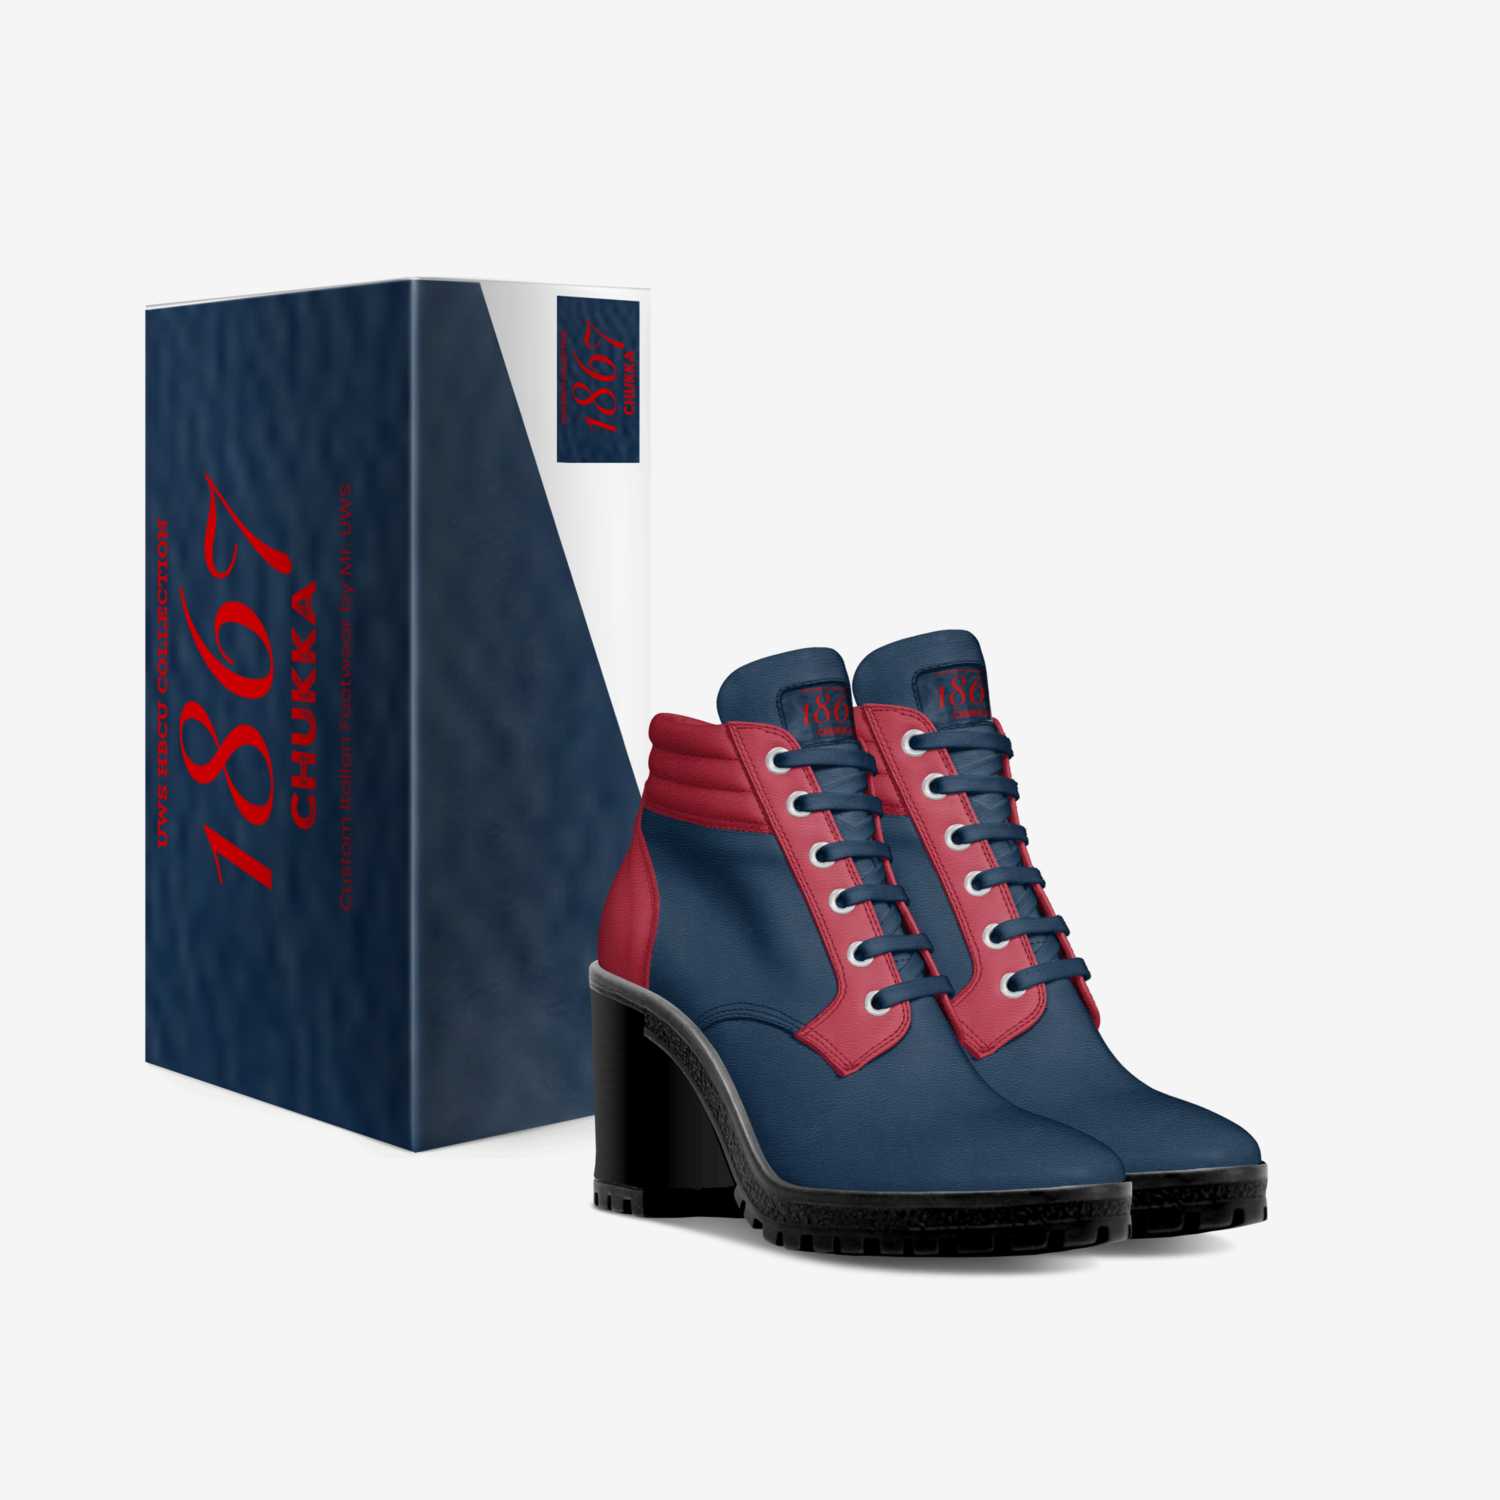 1867 Chukka custom made in Italy shoes by Urbanwallstreet Earl | Box view